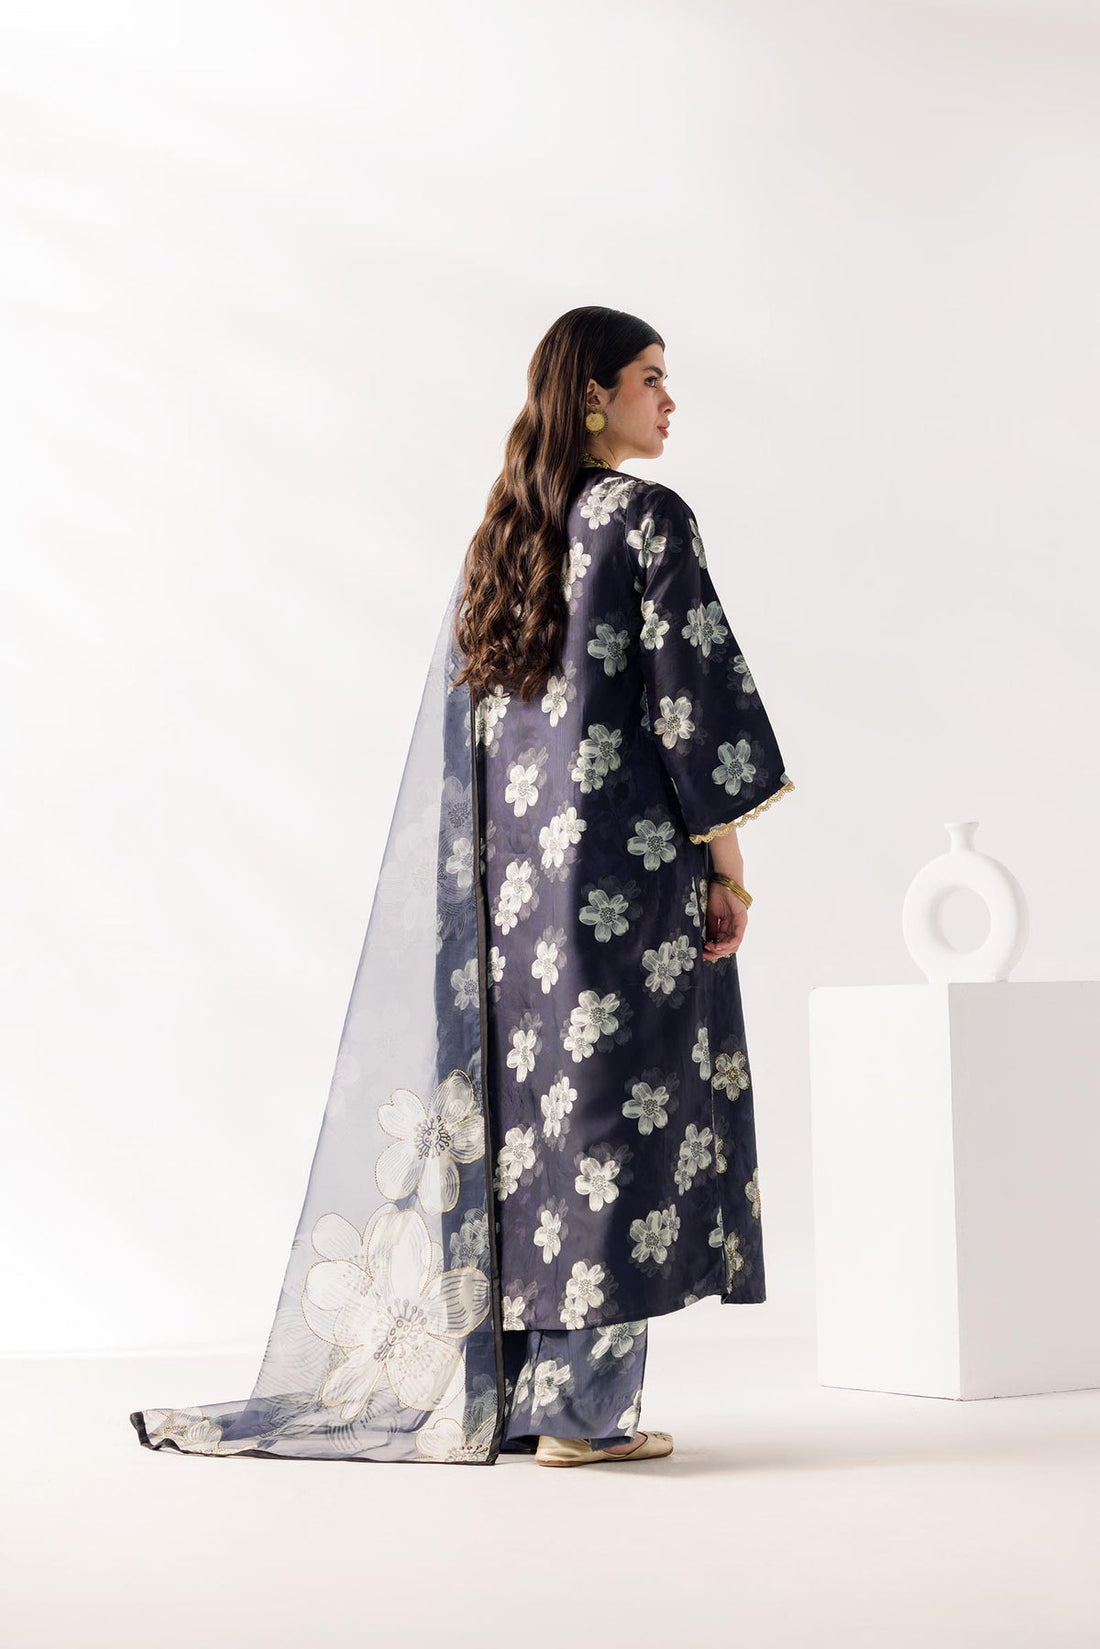 TaanaBaana | Luxe Line | F0396 - Khanumjan  Pakistani Clothes and Designer Dresses in UK, USA 